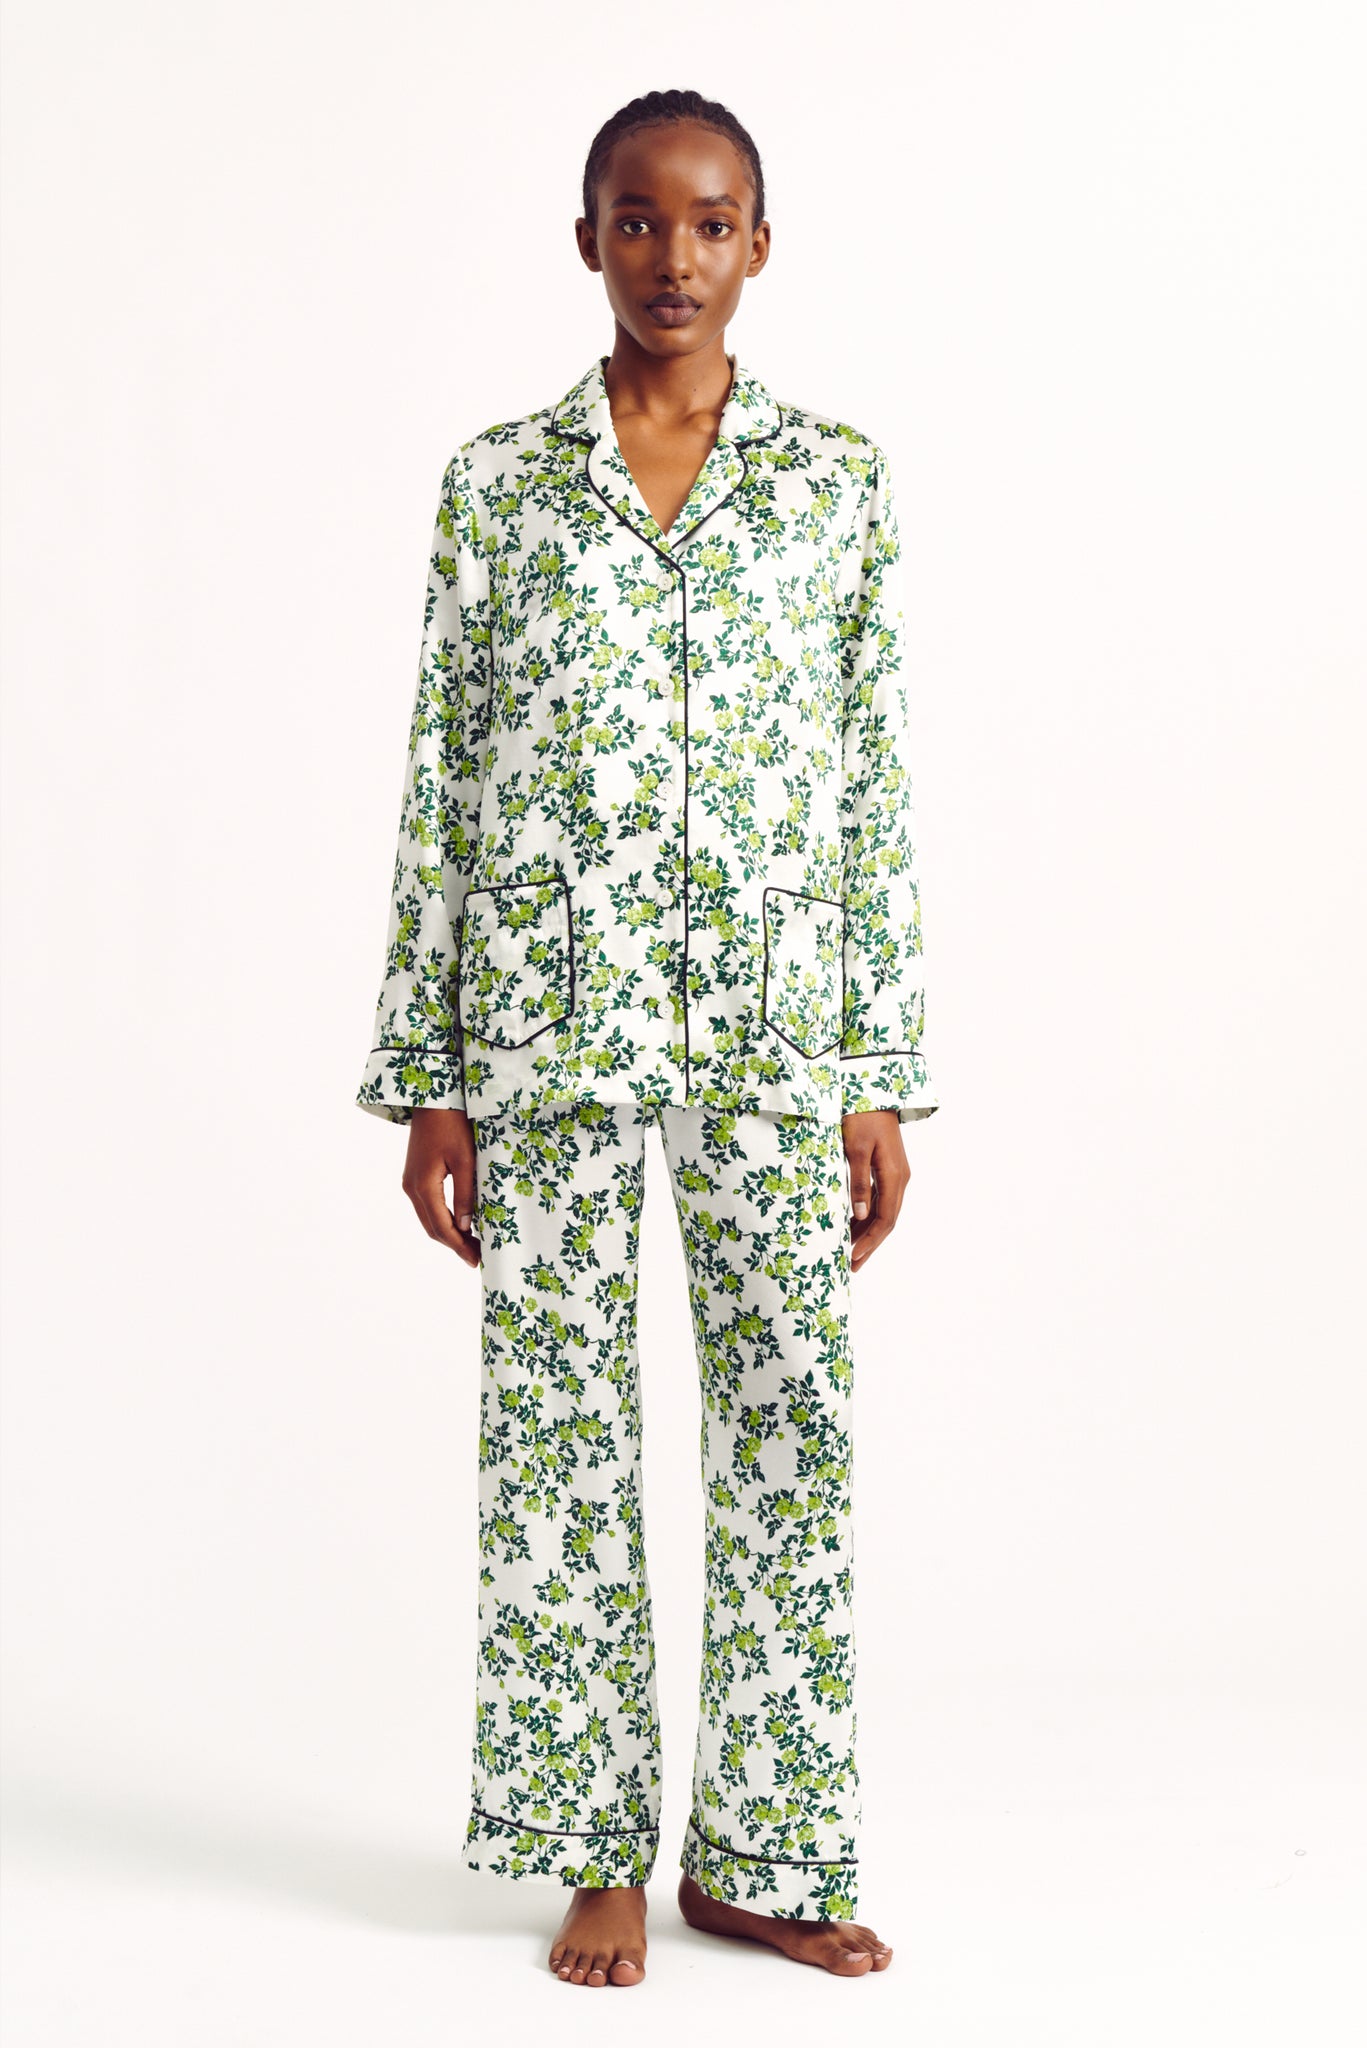 Trina Pyjama Blouse in Chartreuse Roses On Ivory Silk Satin | Emilia Wickstead